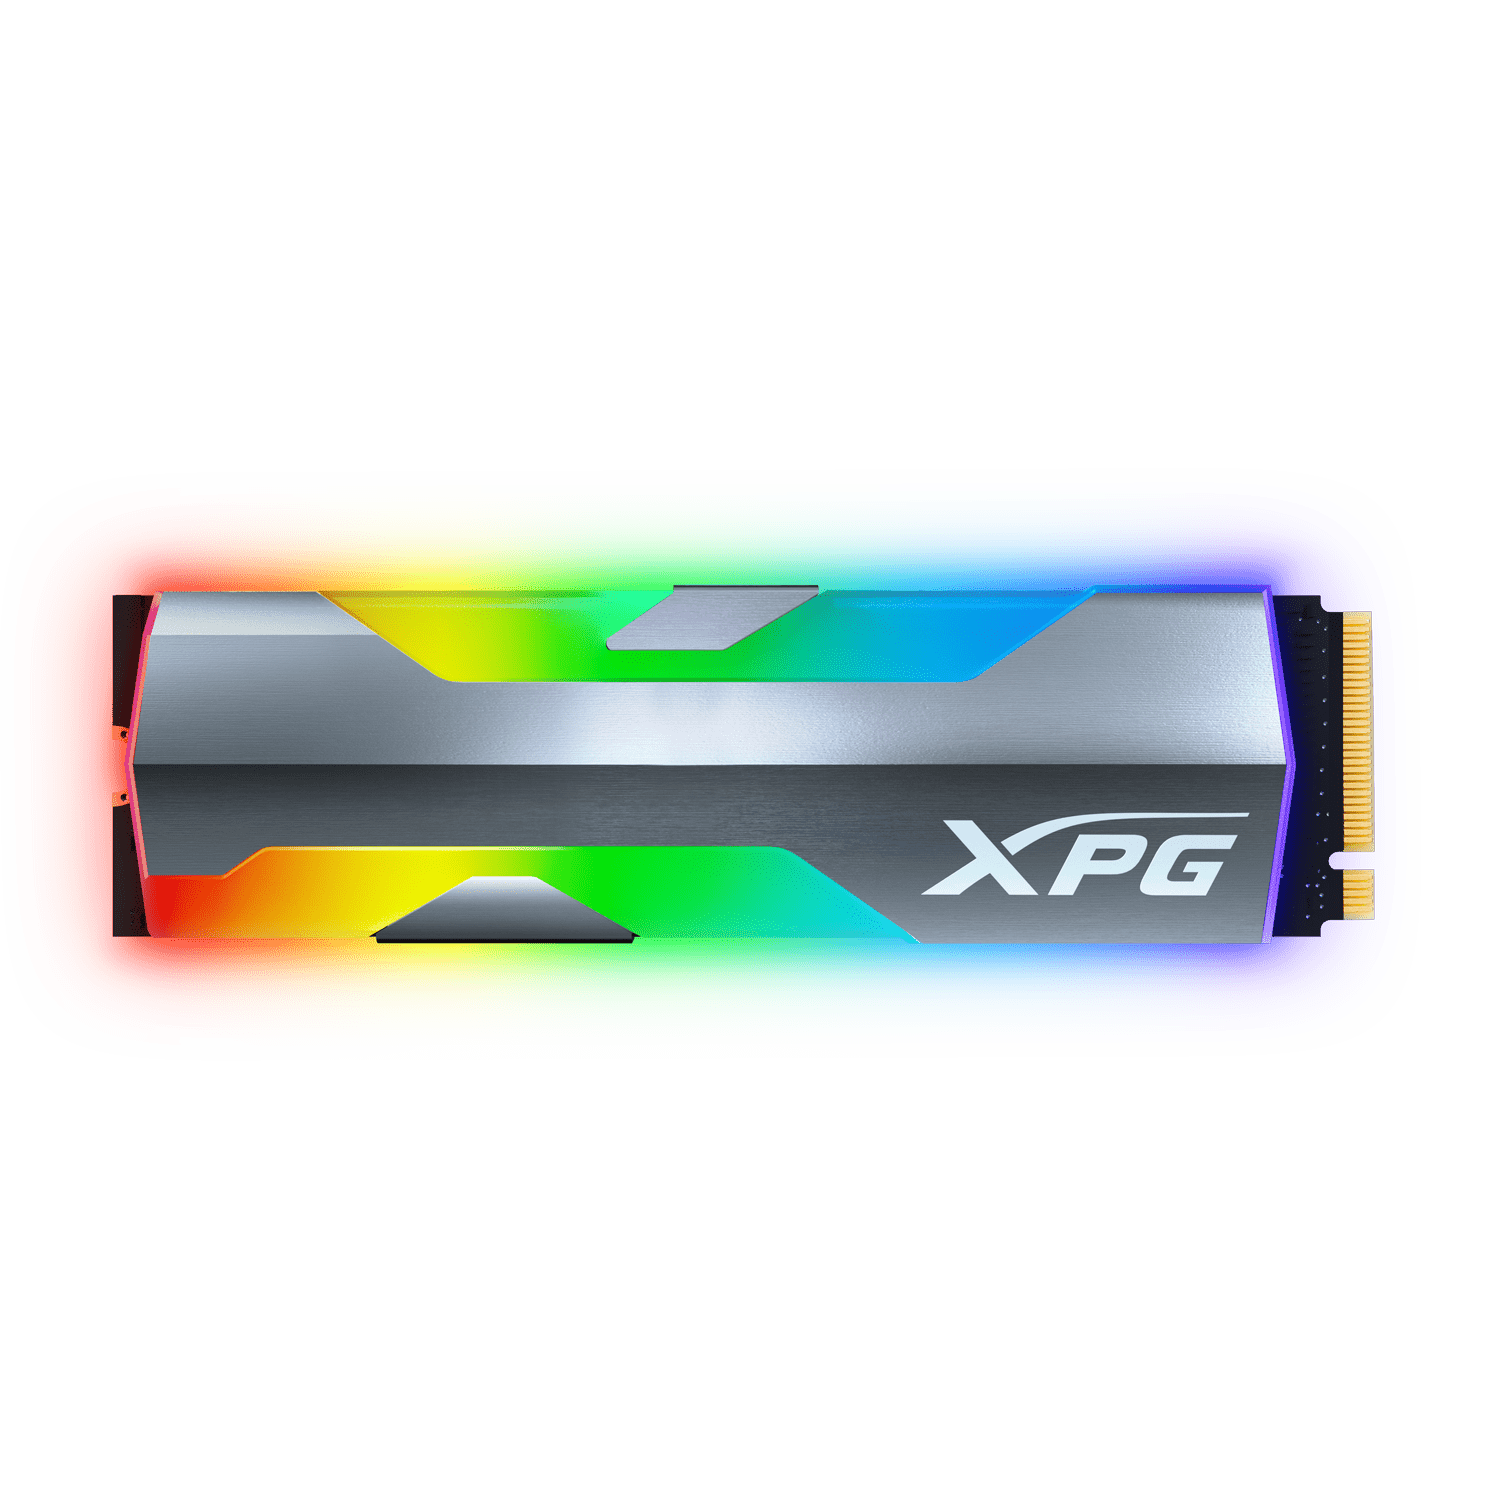 SSD 500Gb ADATA XPG Spectrix S20G (ASPECTRIXS20G-500G-C)